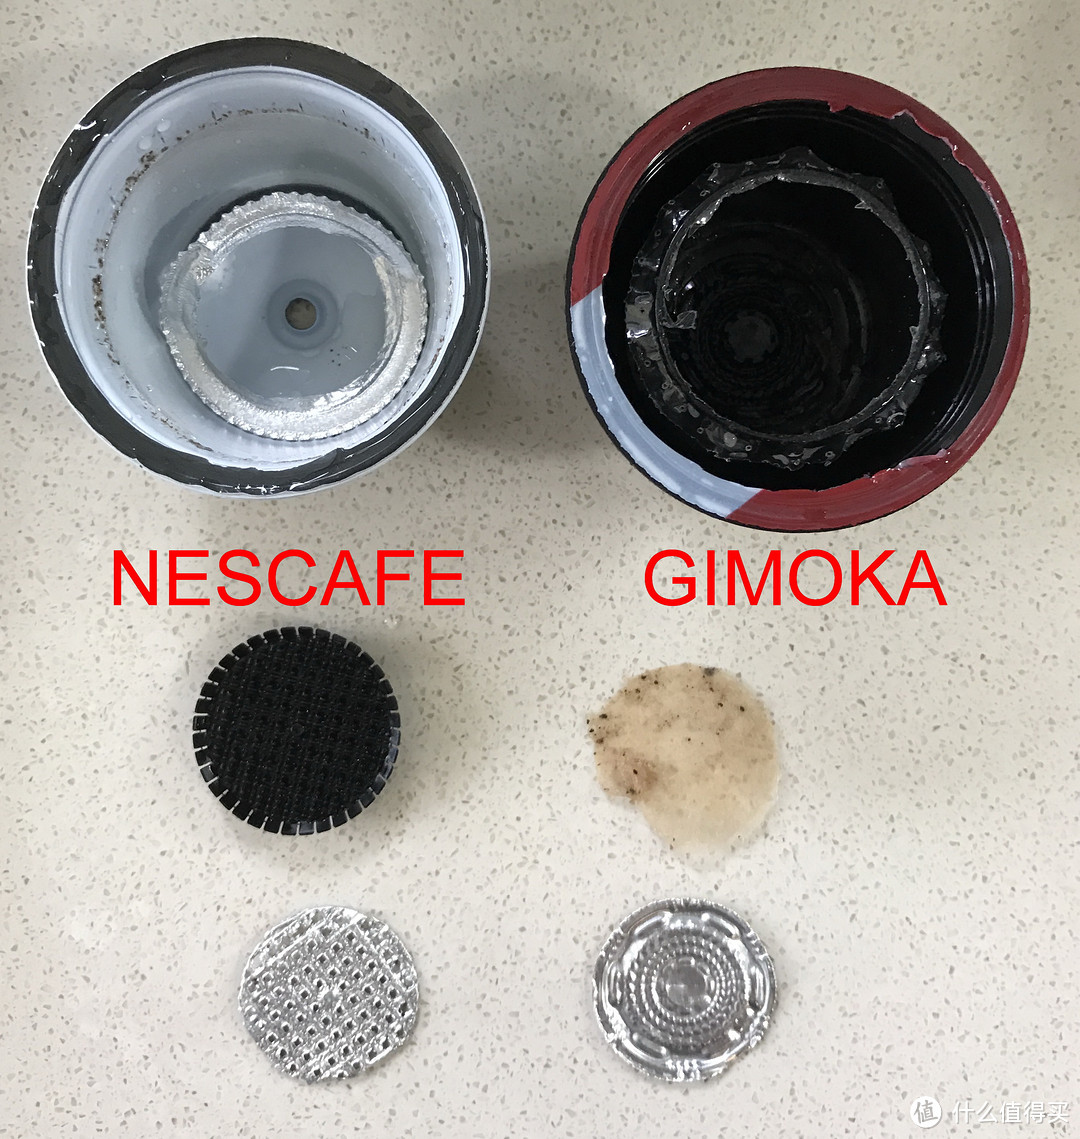 Dolce Gusto原装胶囊与GIMOKA兼容胶囊拆解比较